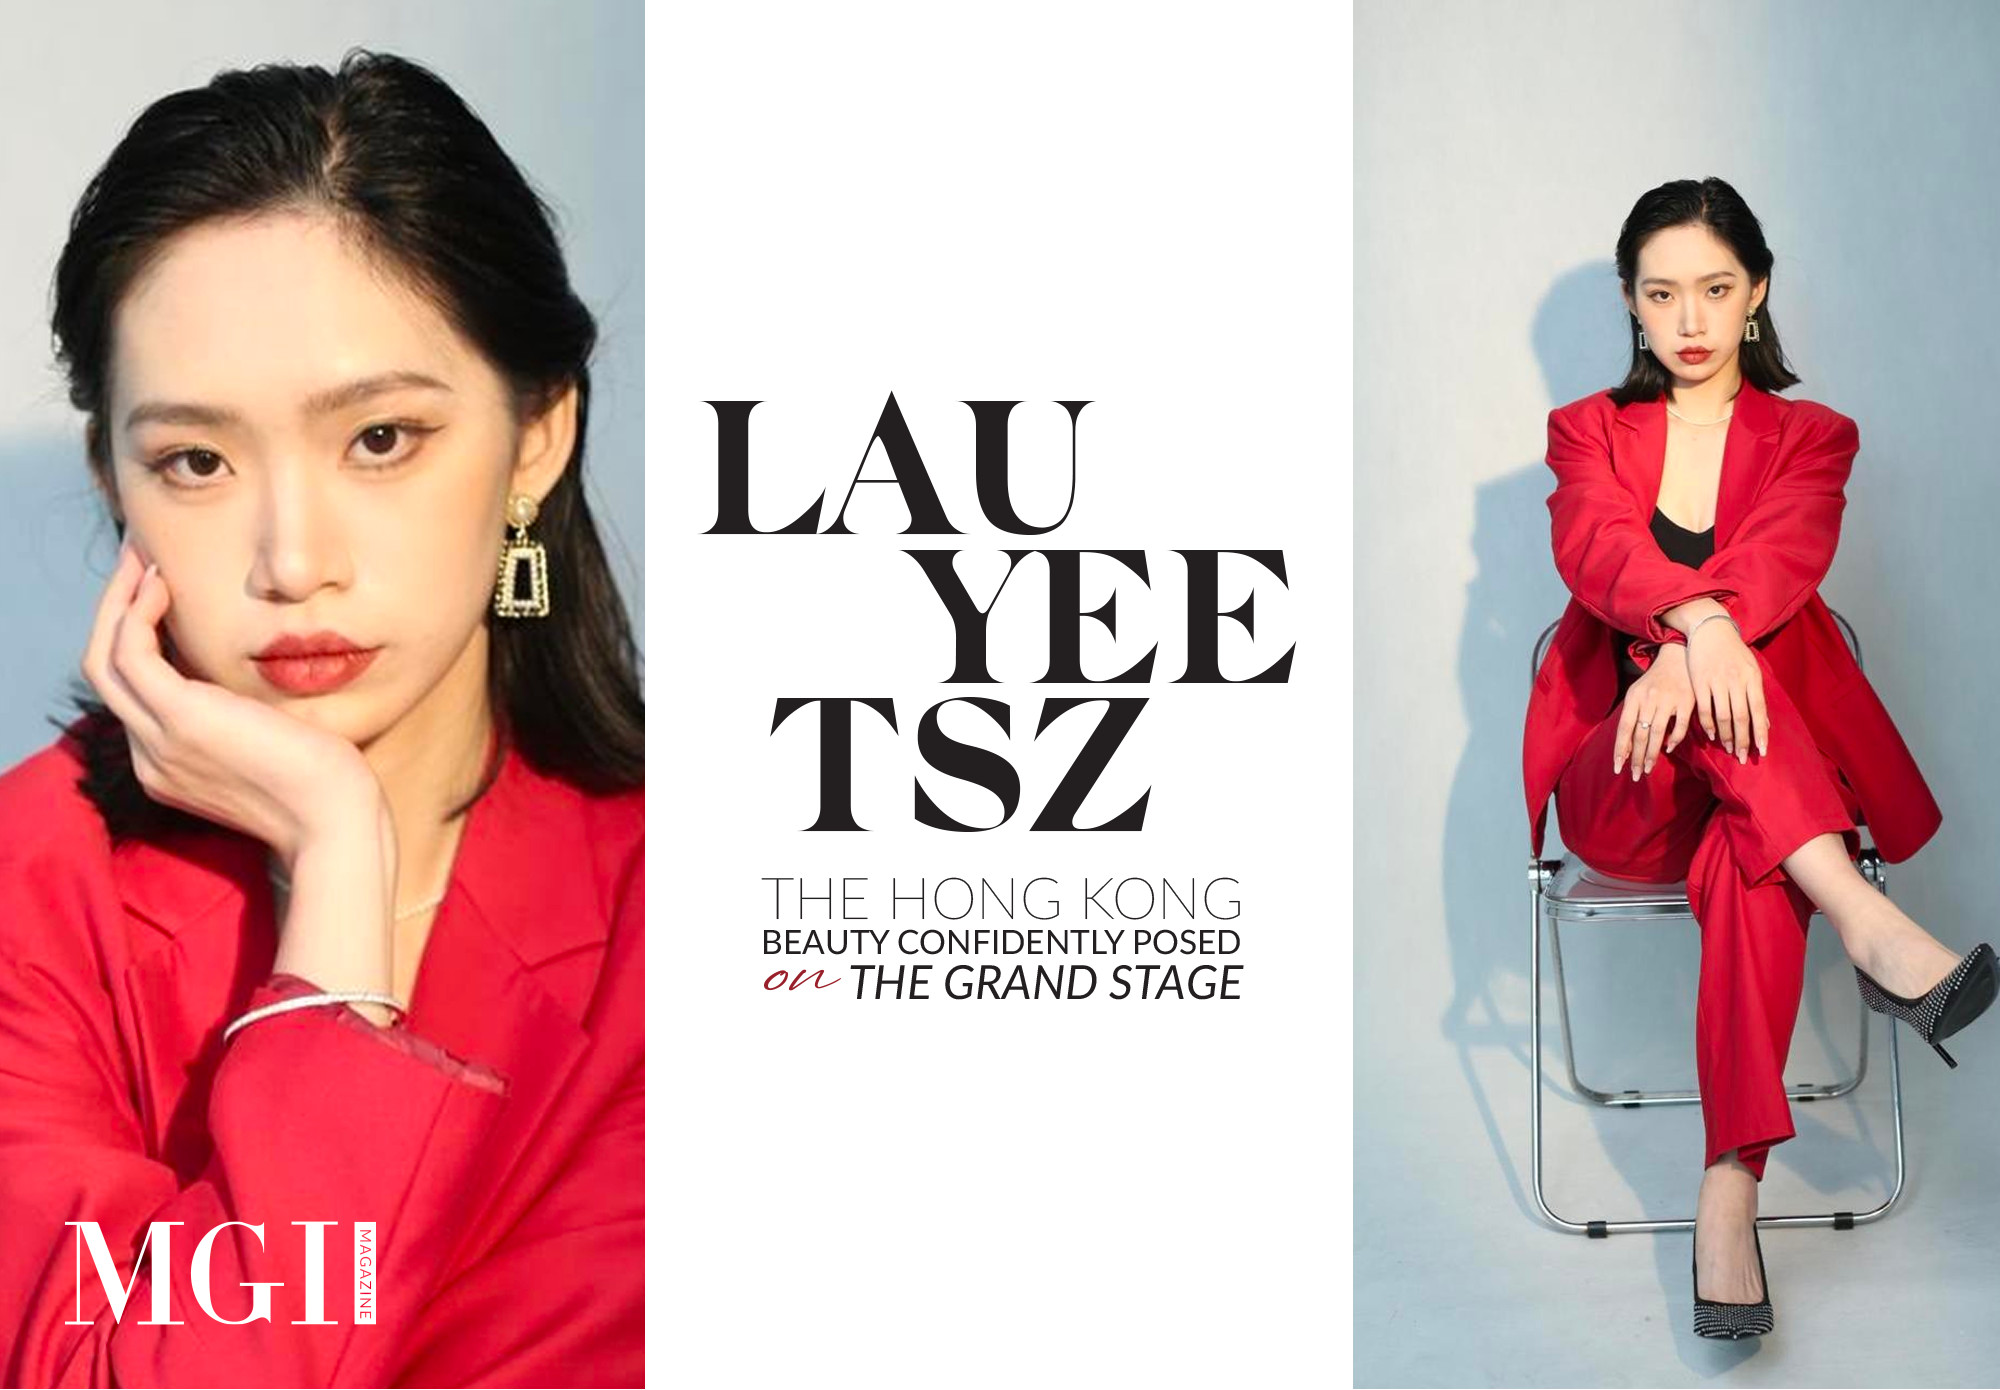 Lau Tsz Yee - The Hong Kong beauty confidently posing on the grand stage